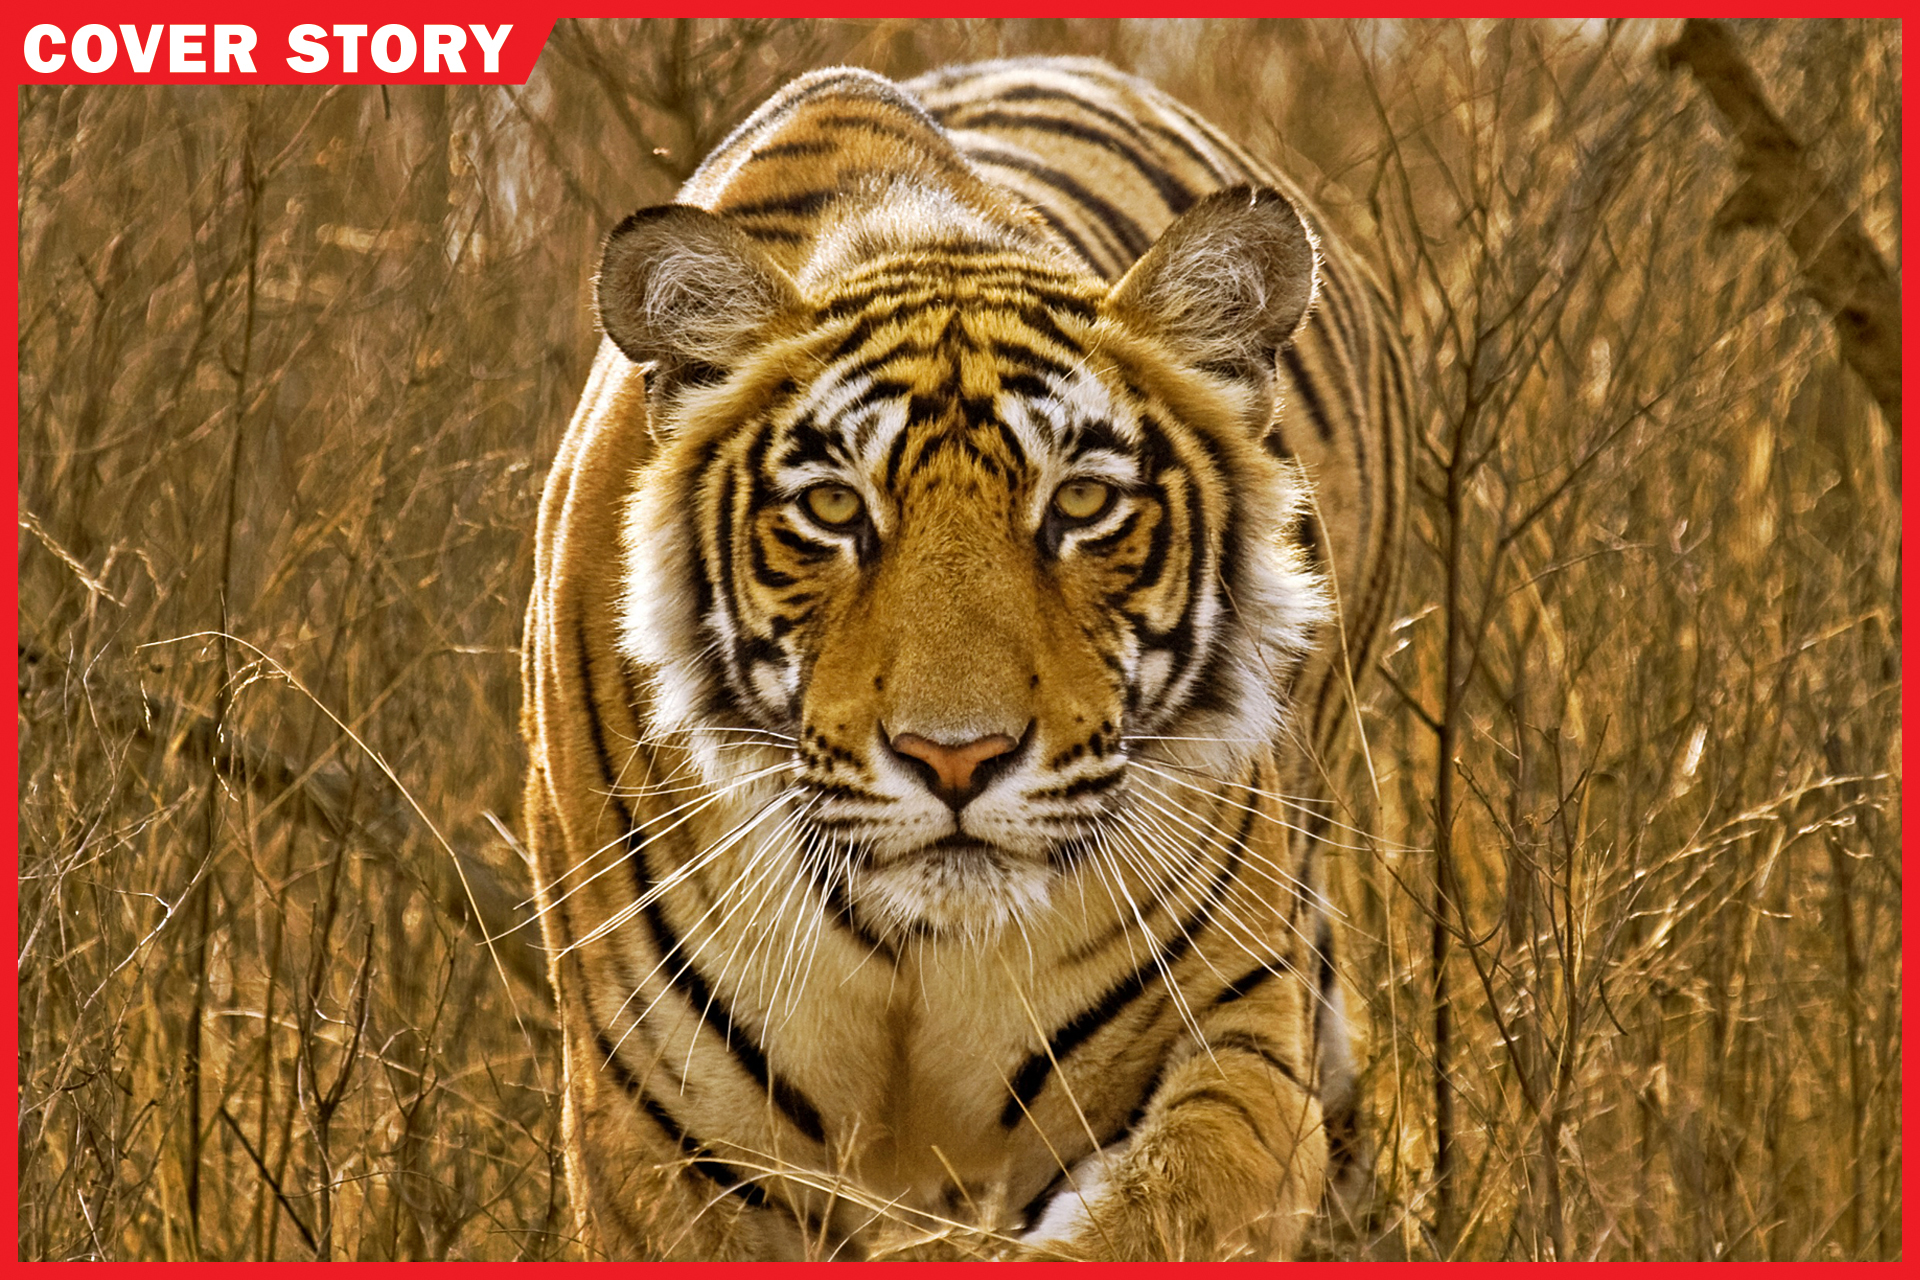 Bengal Tiger Line celebrates 30 years